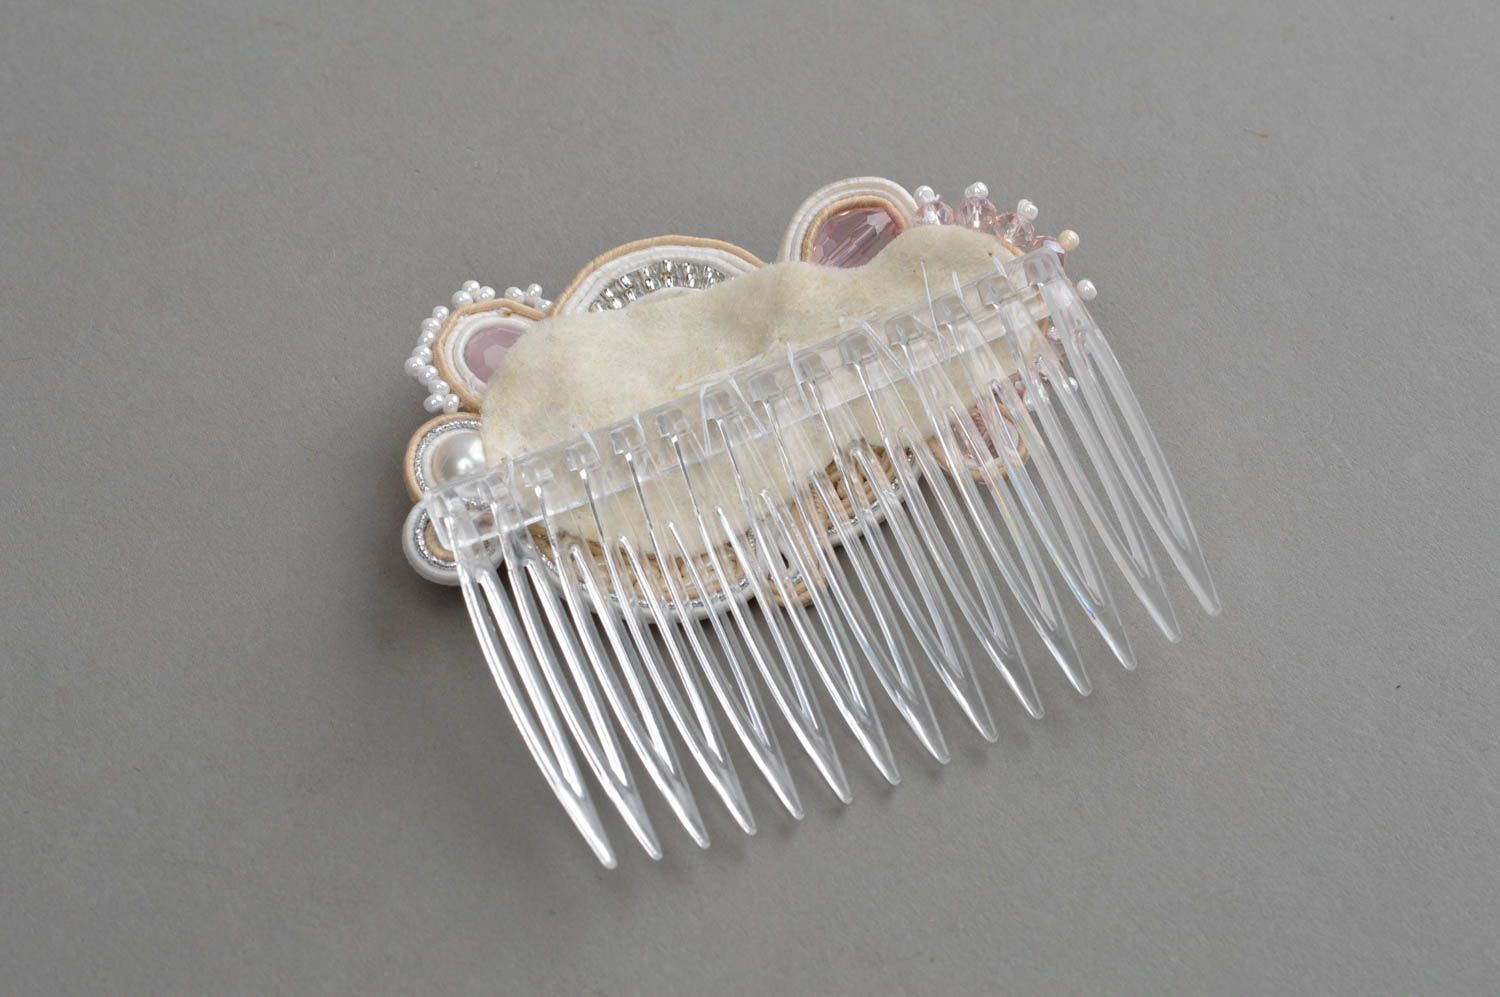 Handmade hair comb soutache barrette designer hair accessories for women photo 4